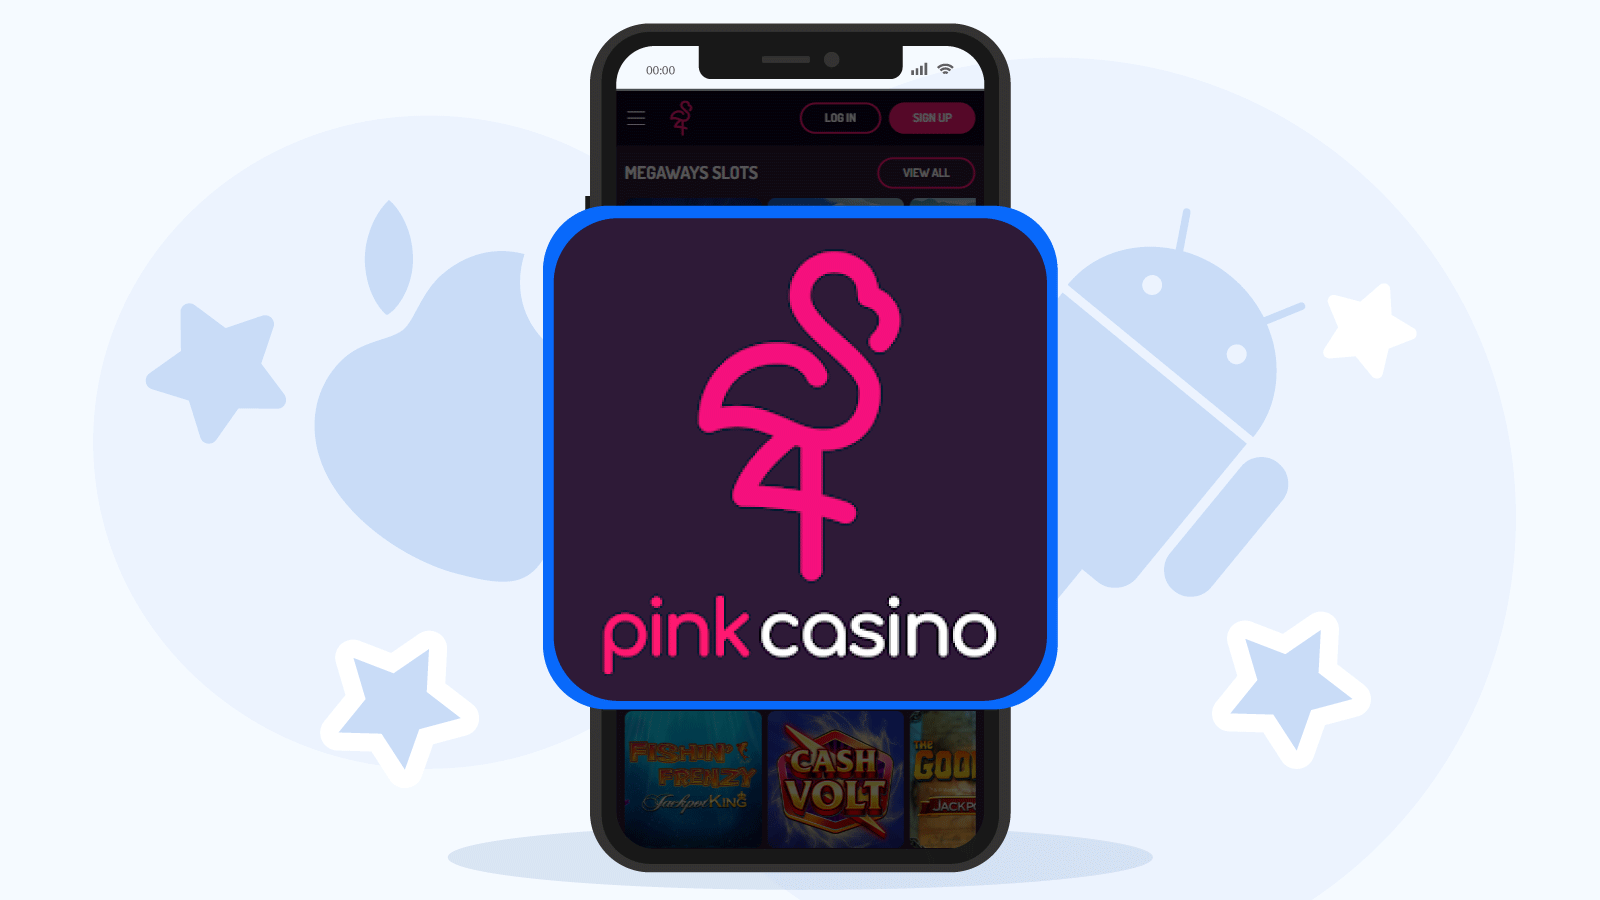 Pink Casino App